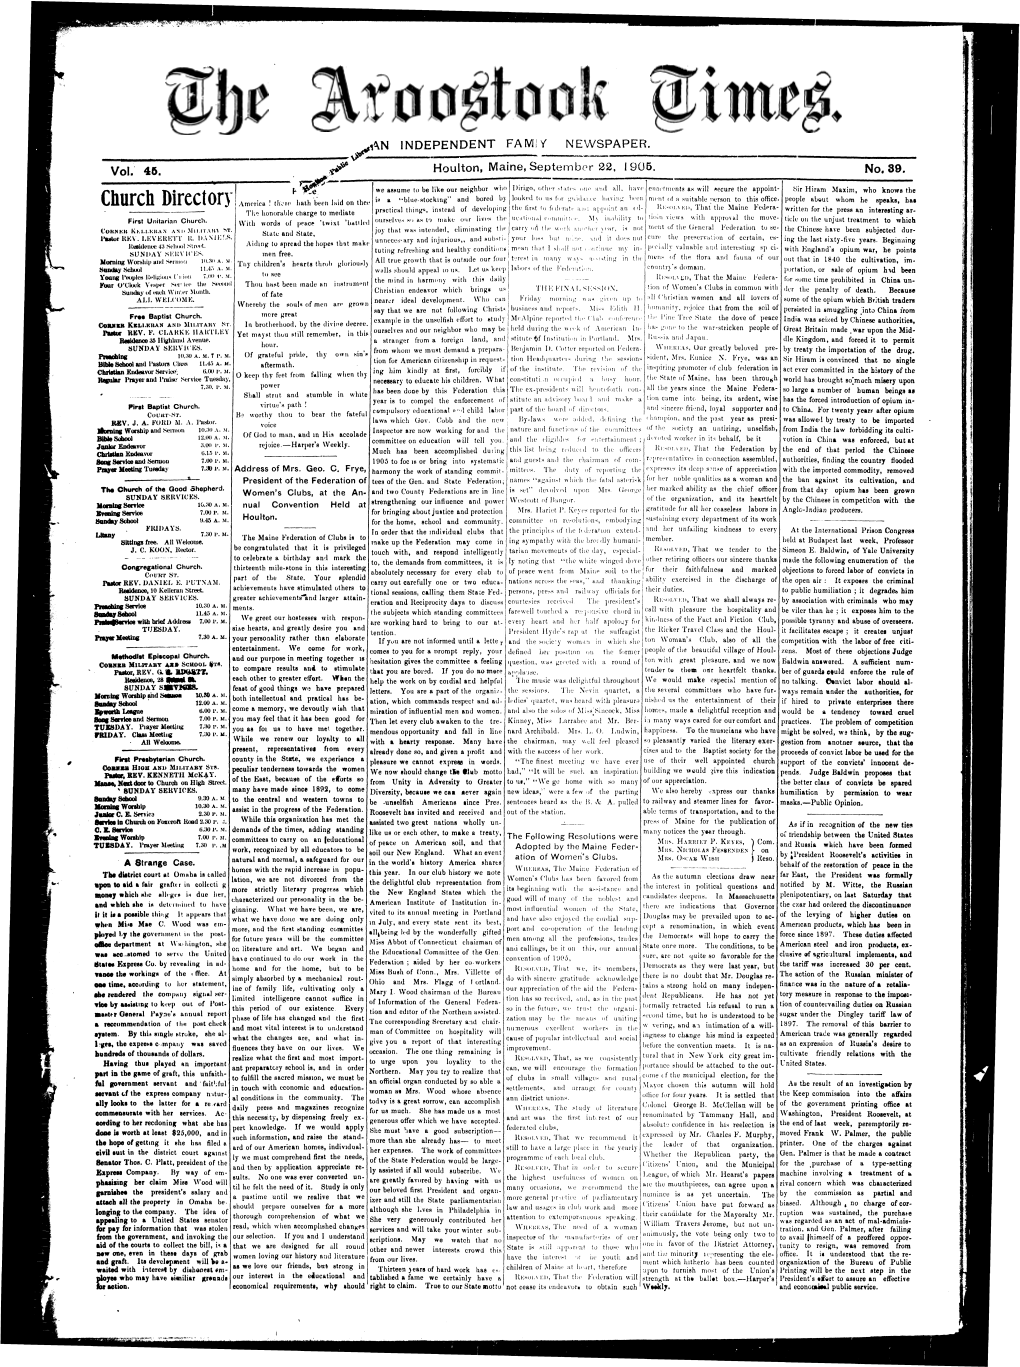 The Aroostook Times, September 22, 1905